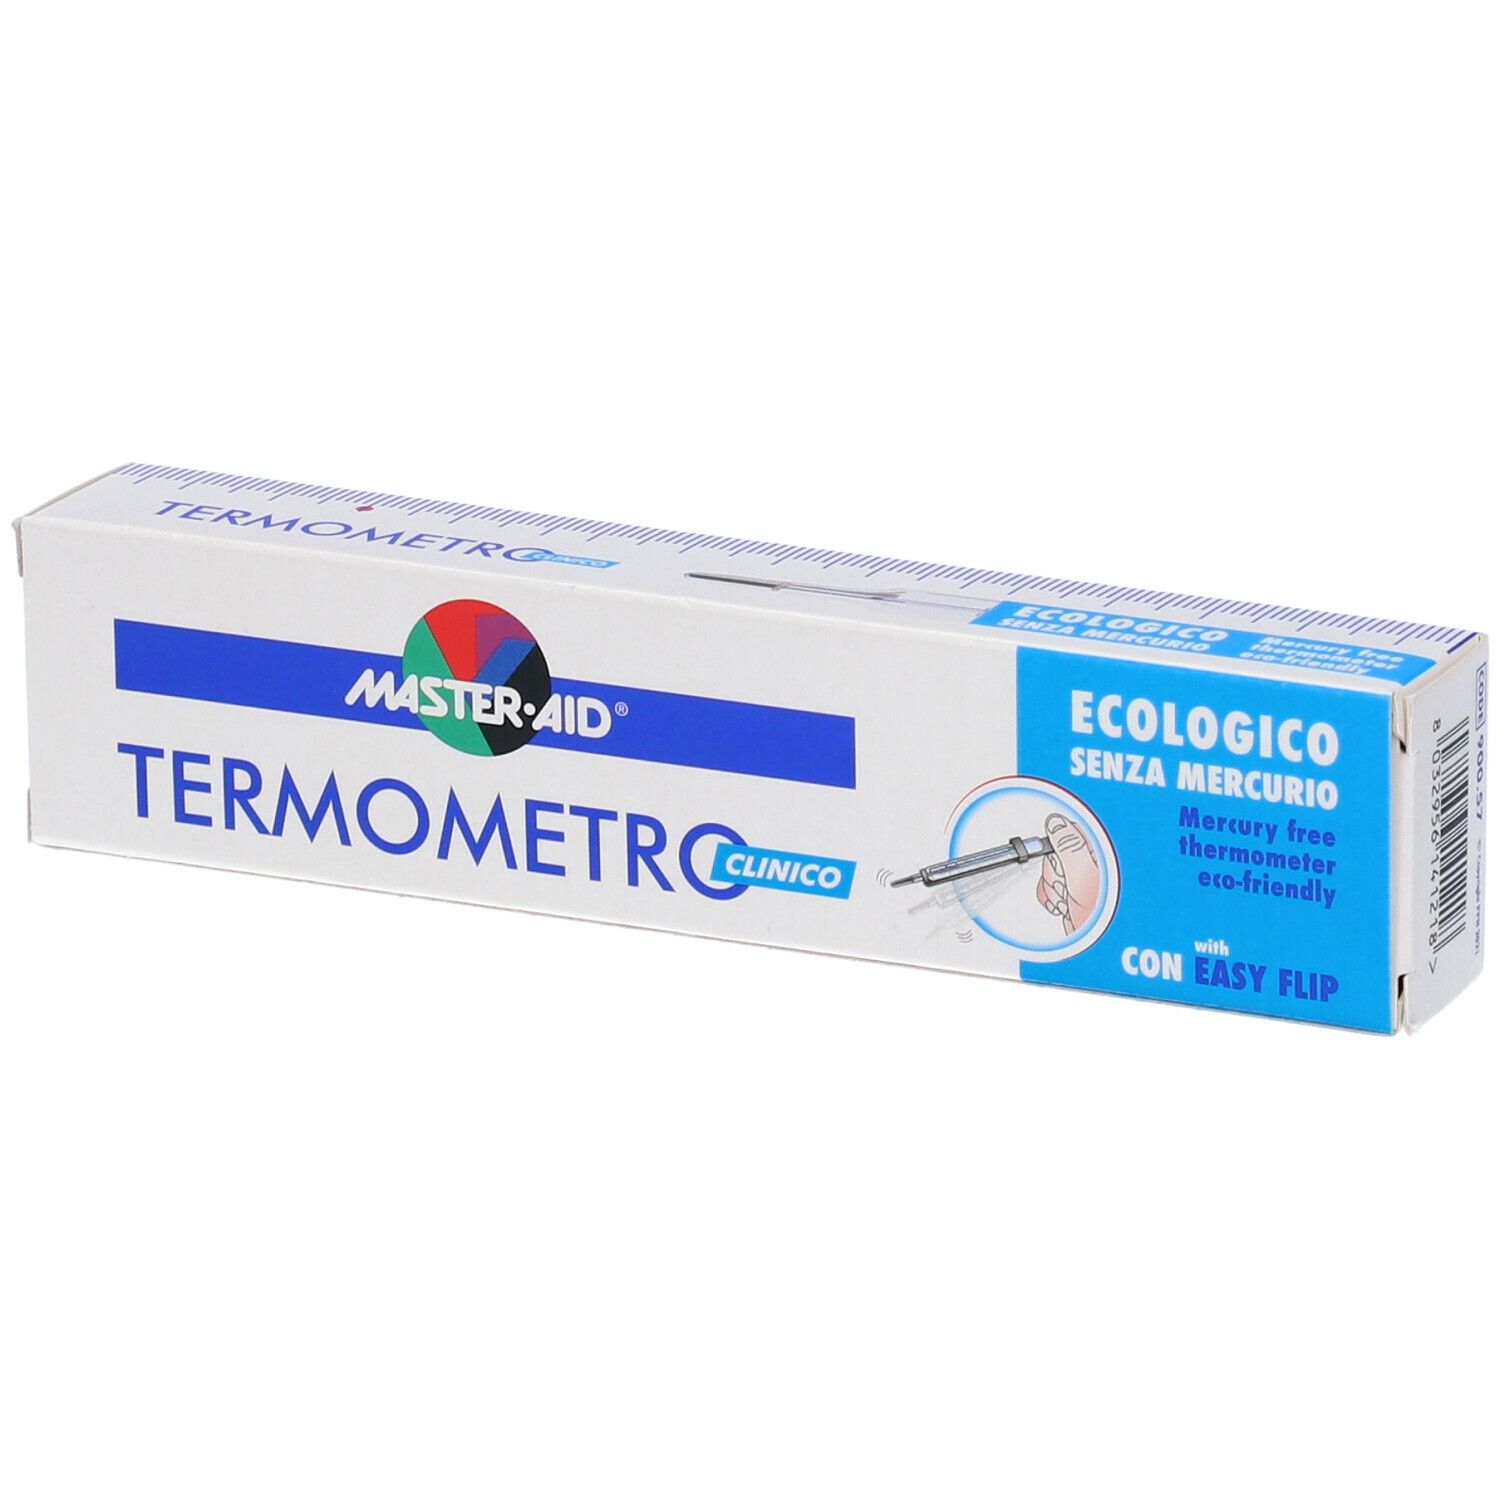 Master-Aid® Termometro Clinico